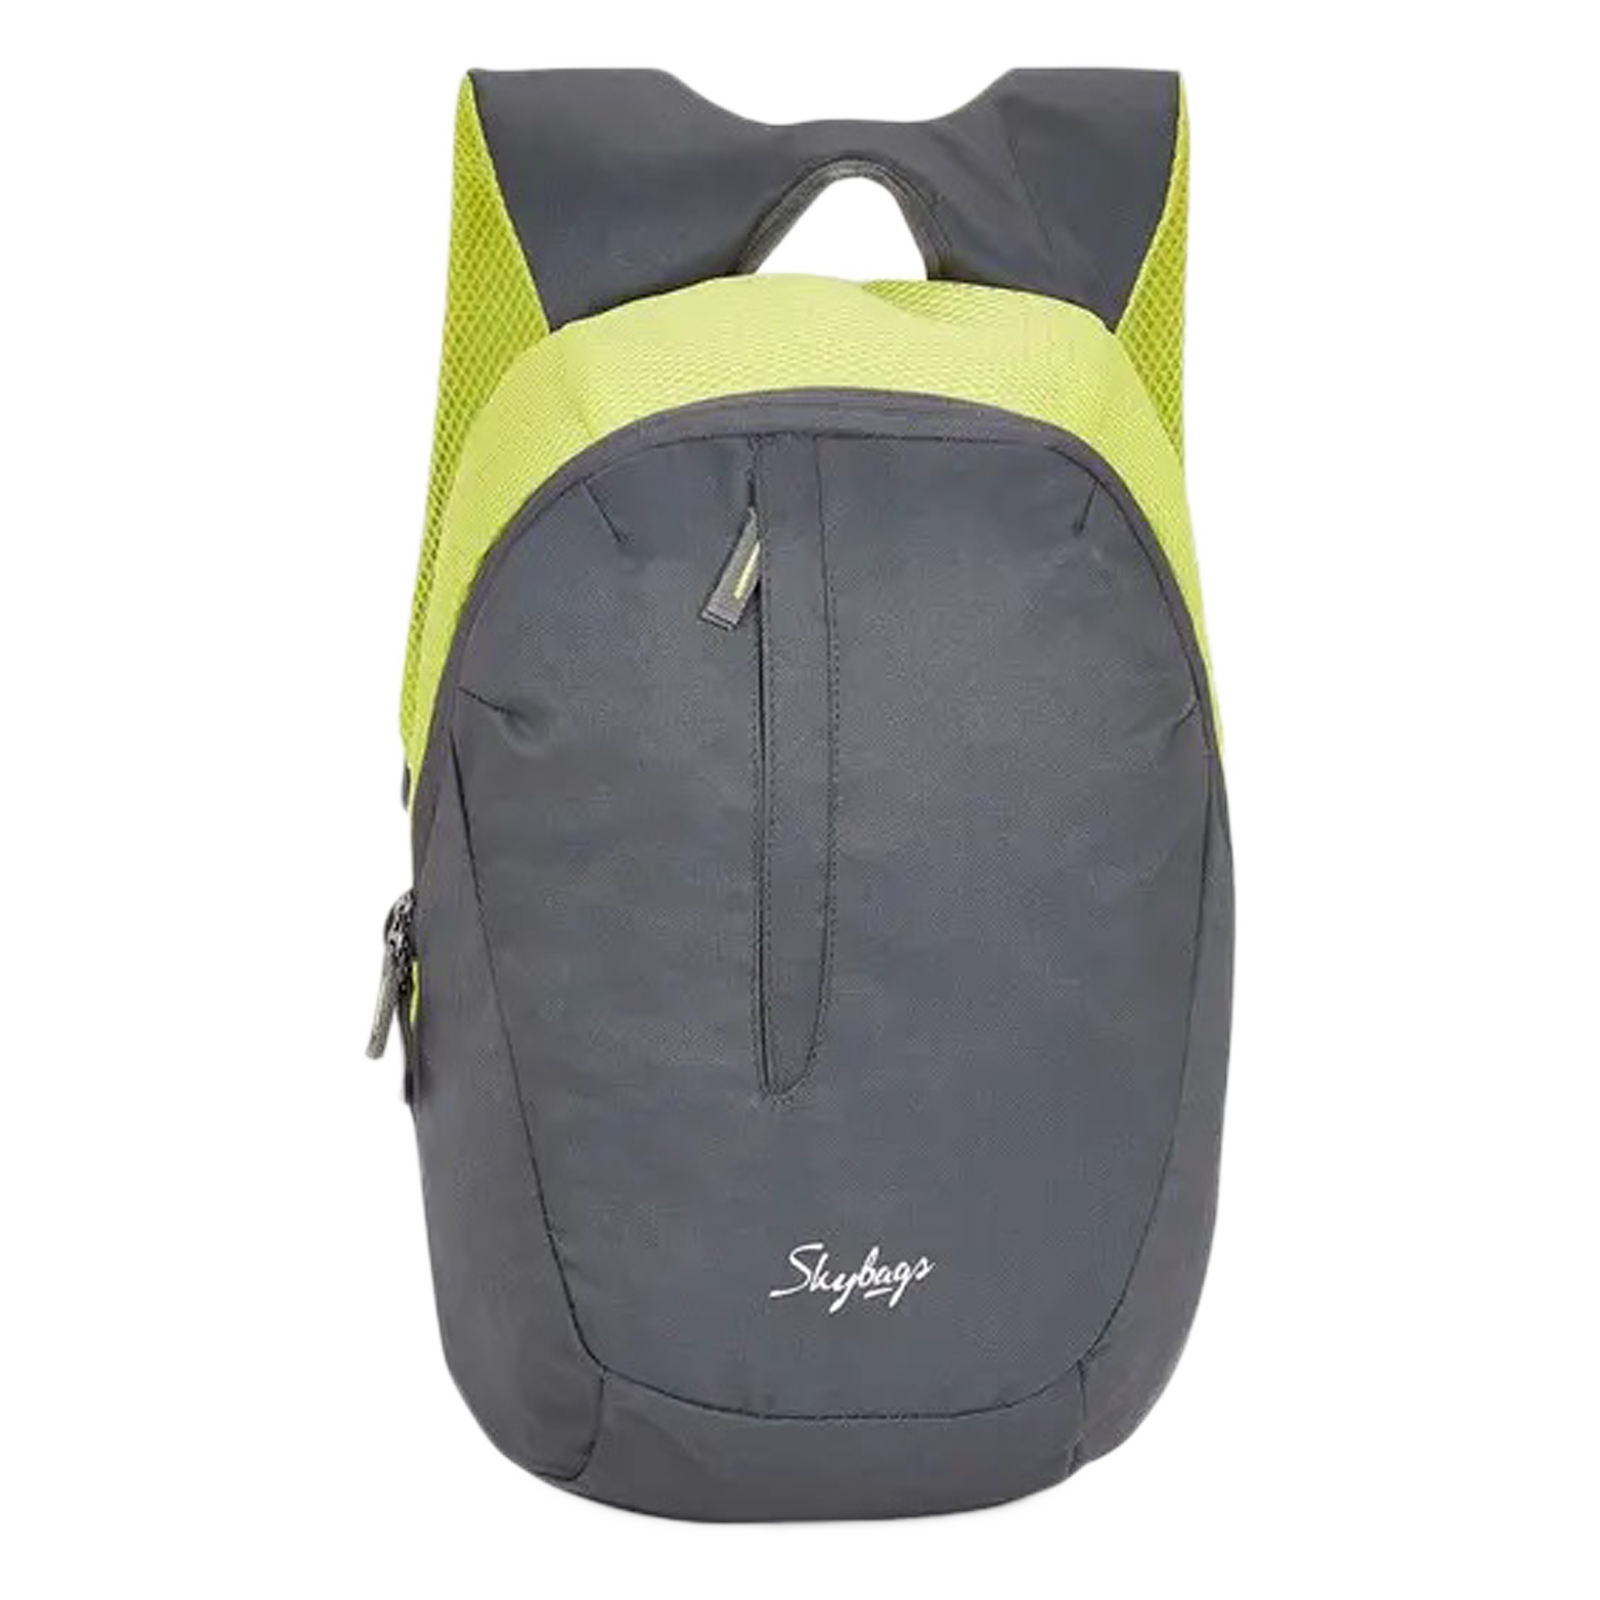 Skybags Zuke Backpack (Padded Shoulder Strap, BPZUK2GRY, Grey)